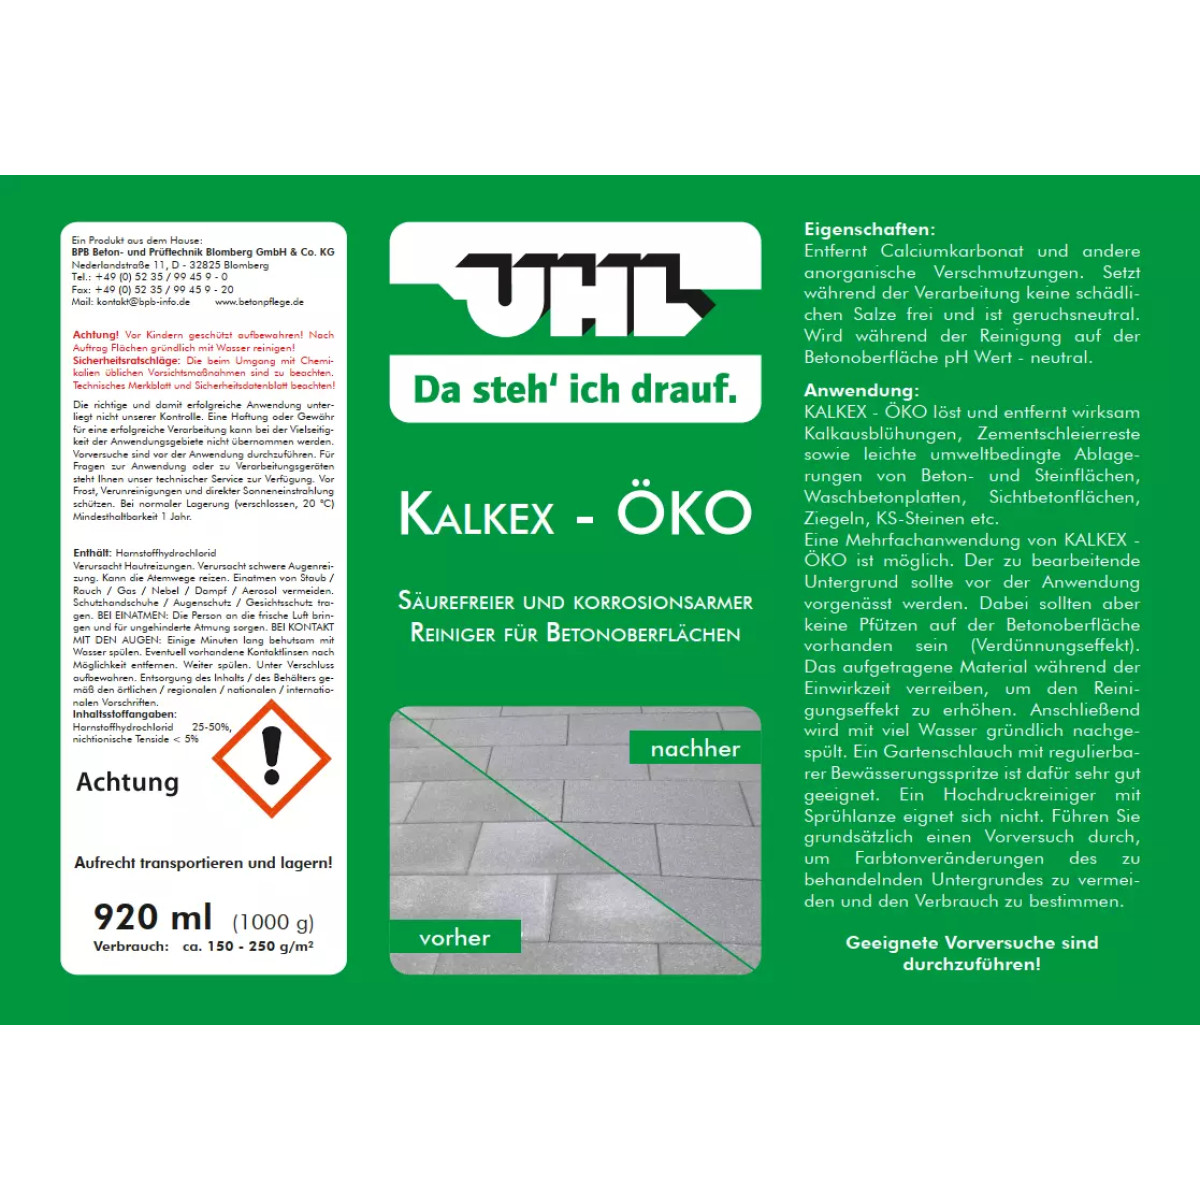 2020 08 03 15 18 59 UHL Kalkex oeko ab09 19.pdf Foxit PhantomPDF